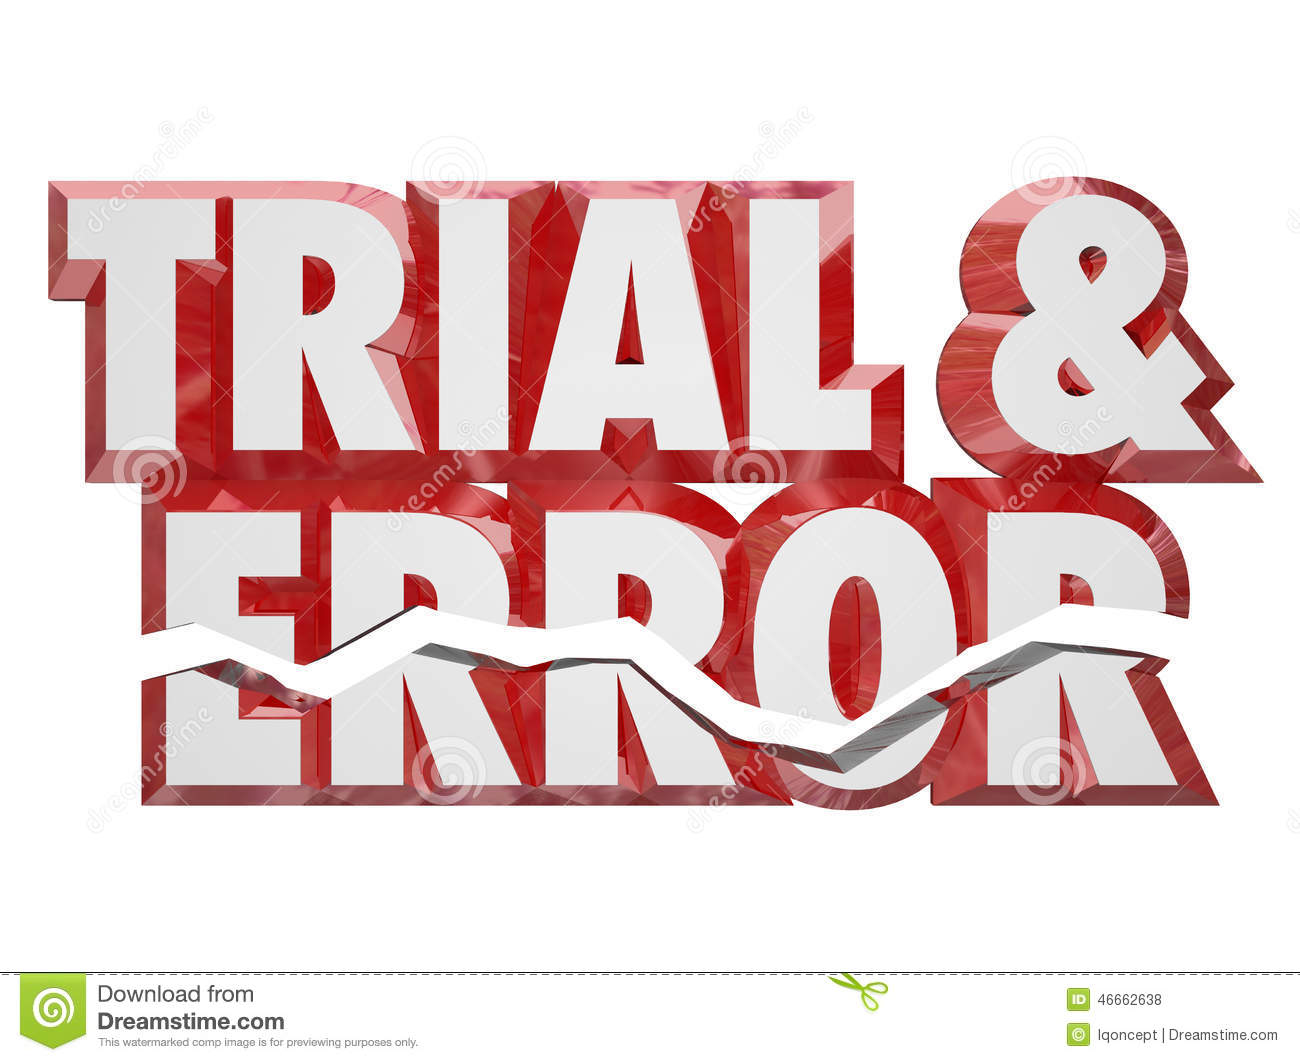 Trial & Error #1